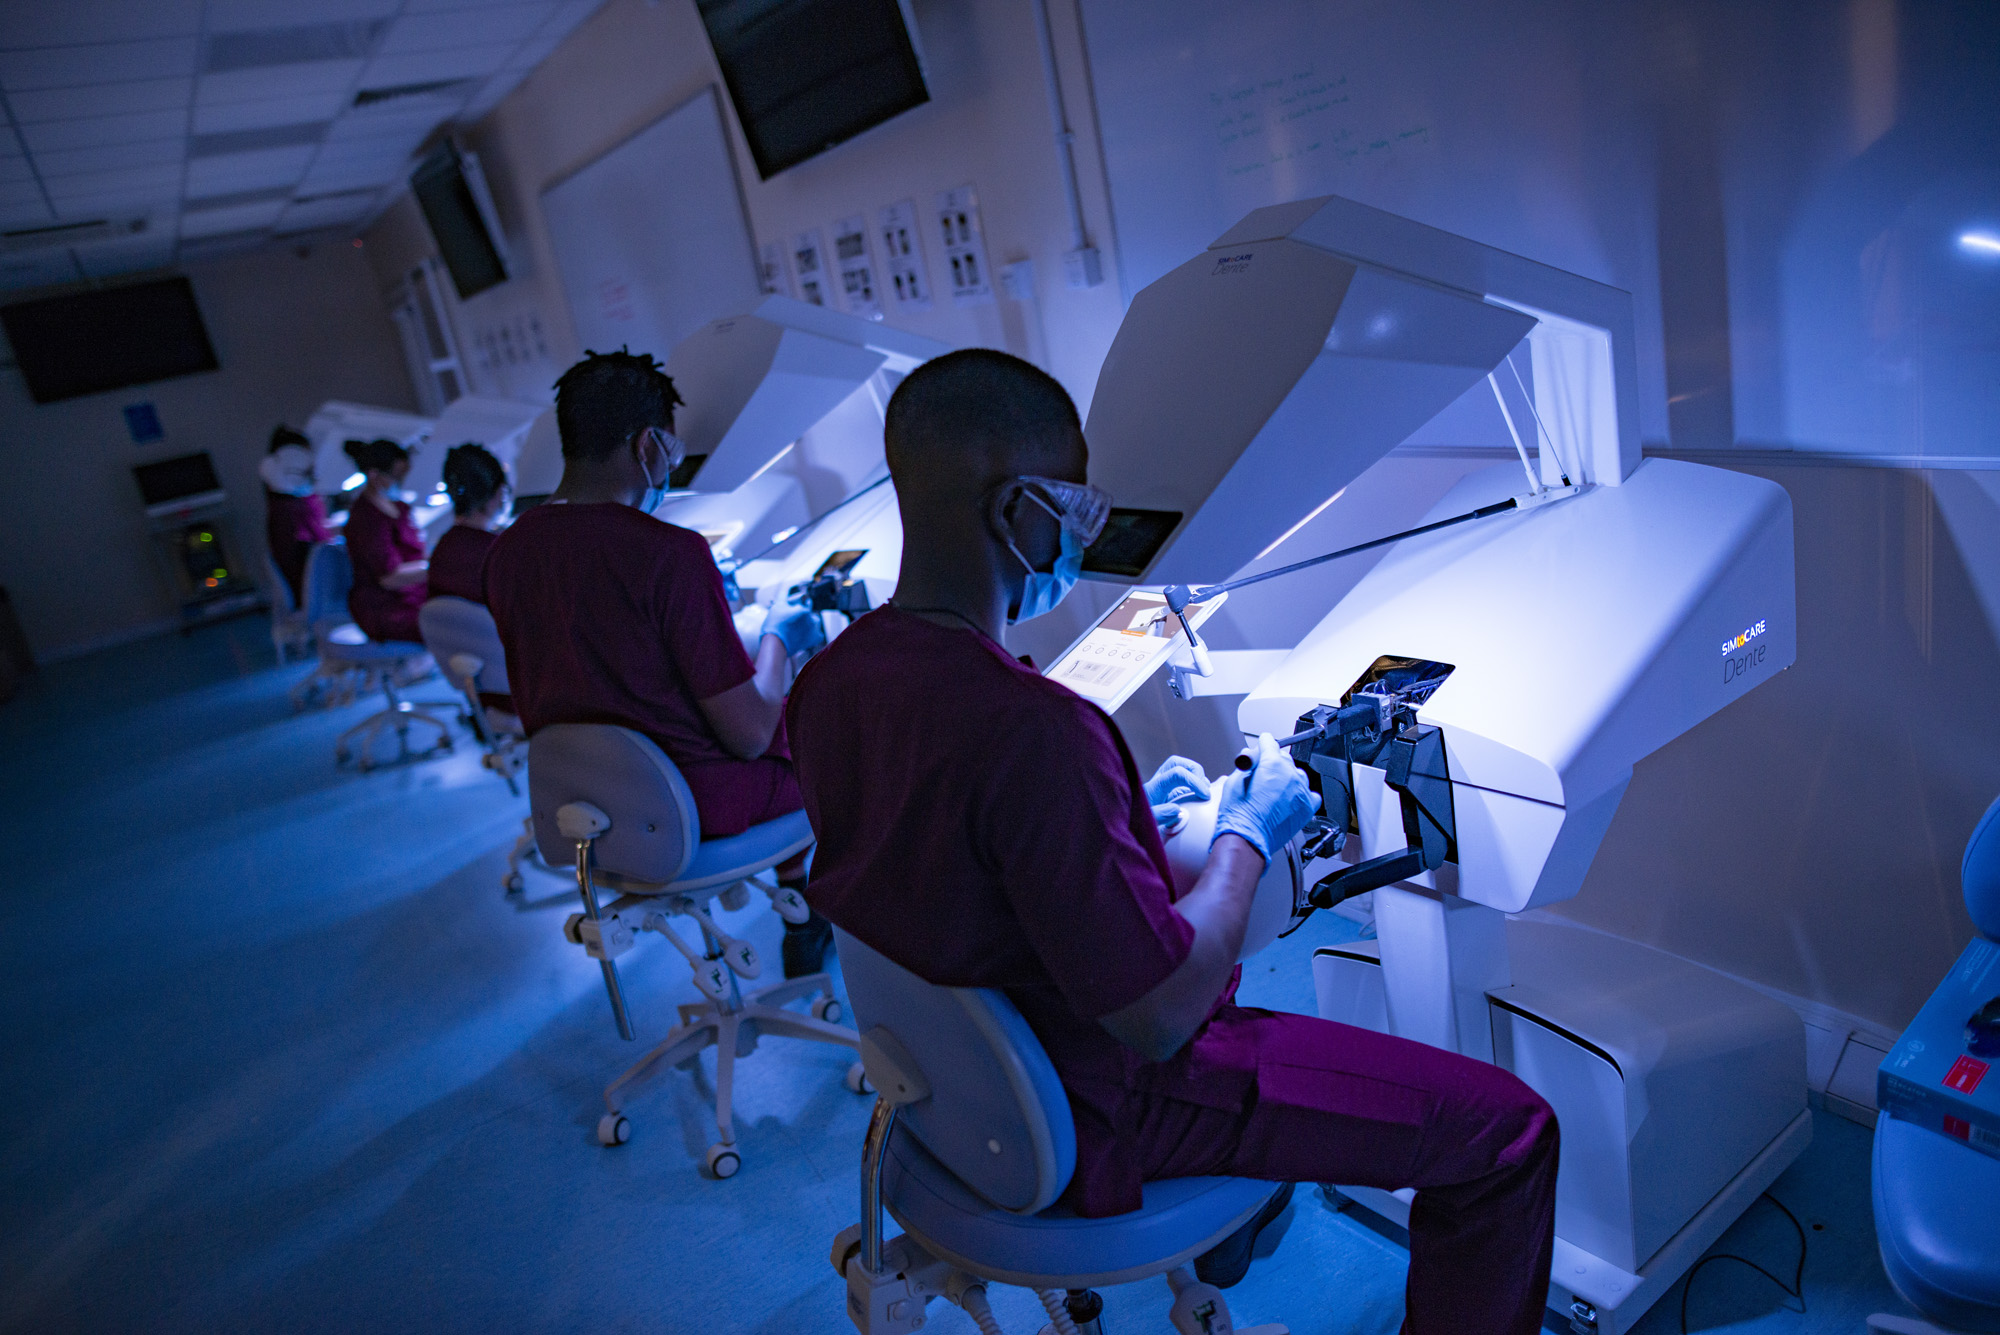 Dental students using the new SimToCare haptic simulators